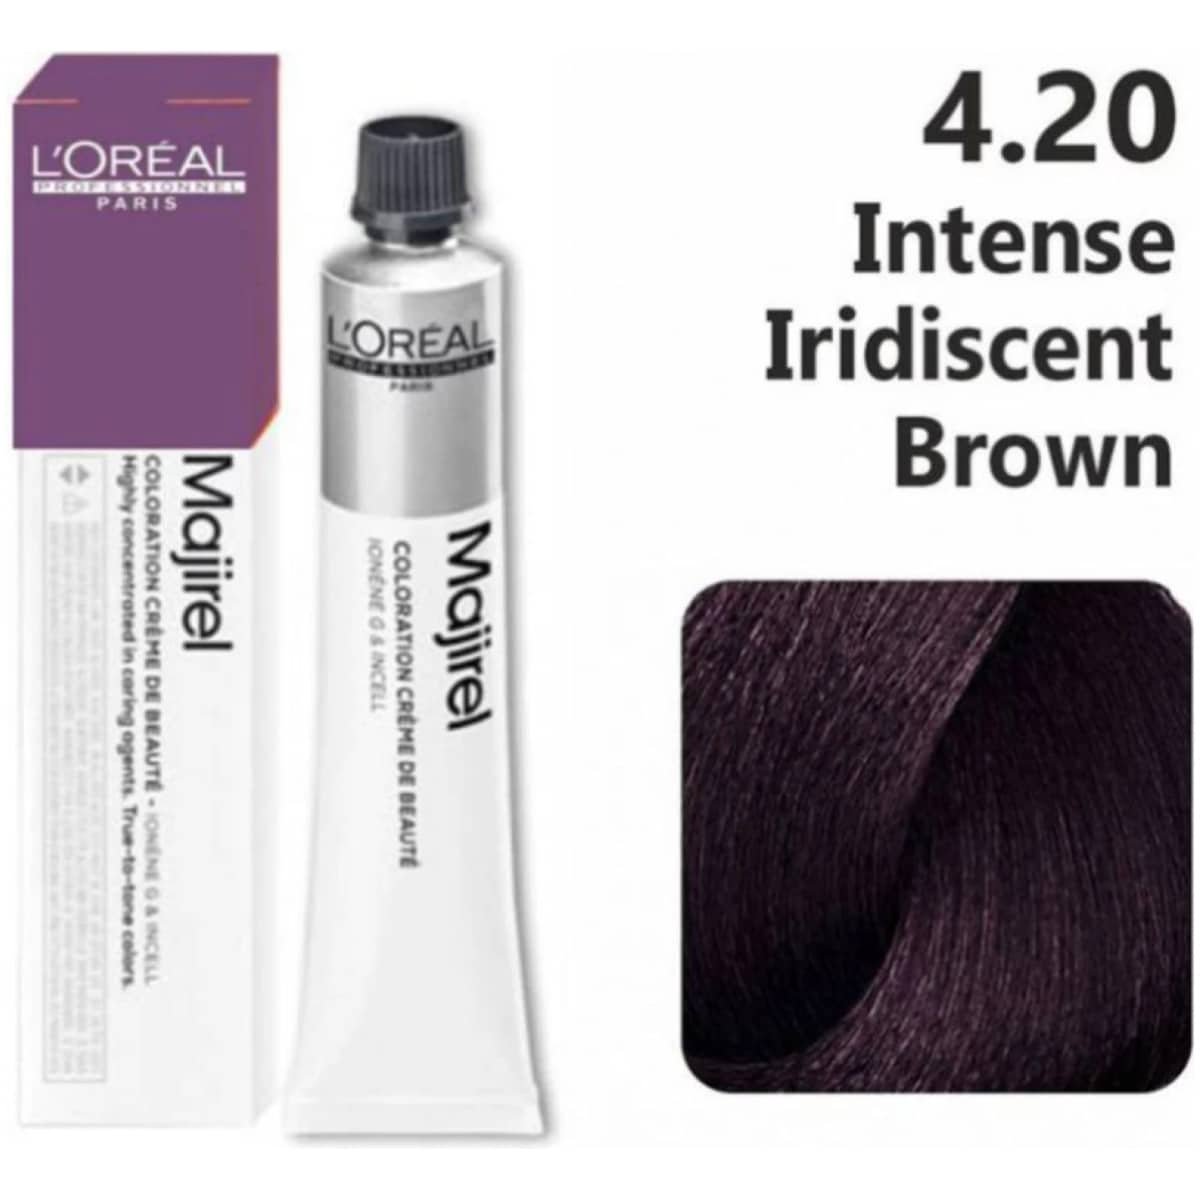 L’Oreal Majirel Hair Color 50G 4.20 Intense Iridescent Brown + Oxidant 1000Ml Combo